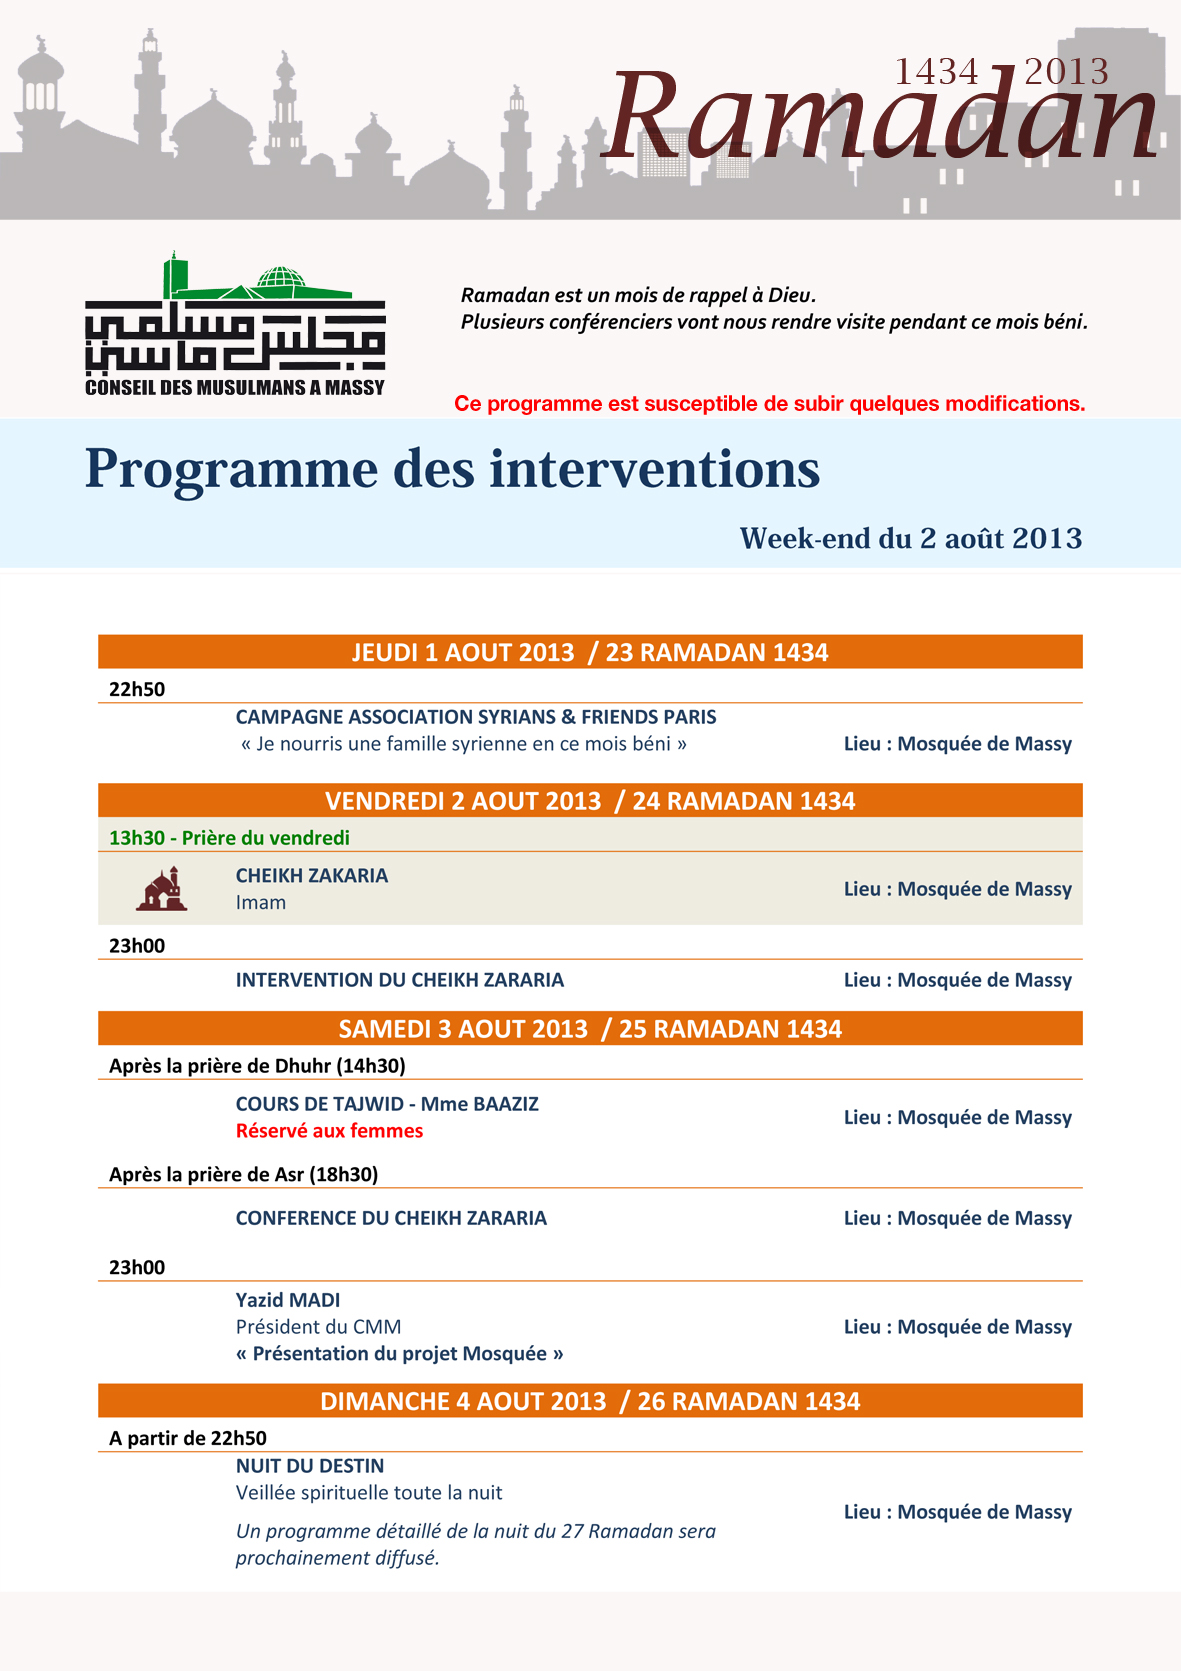 Programme des interventions - week-end du 2 août 2013